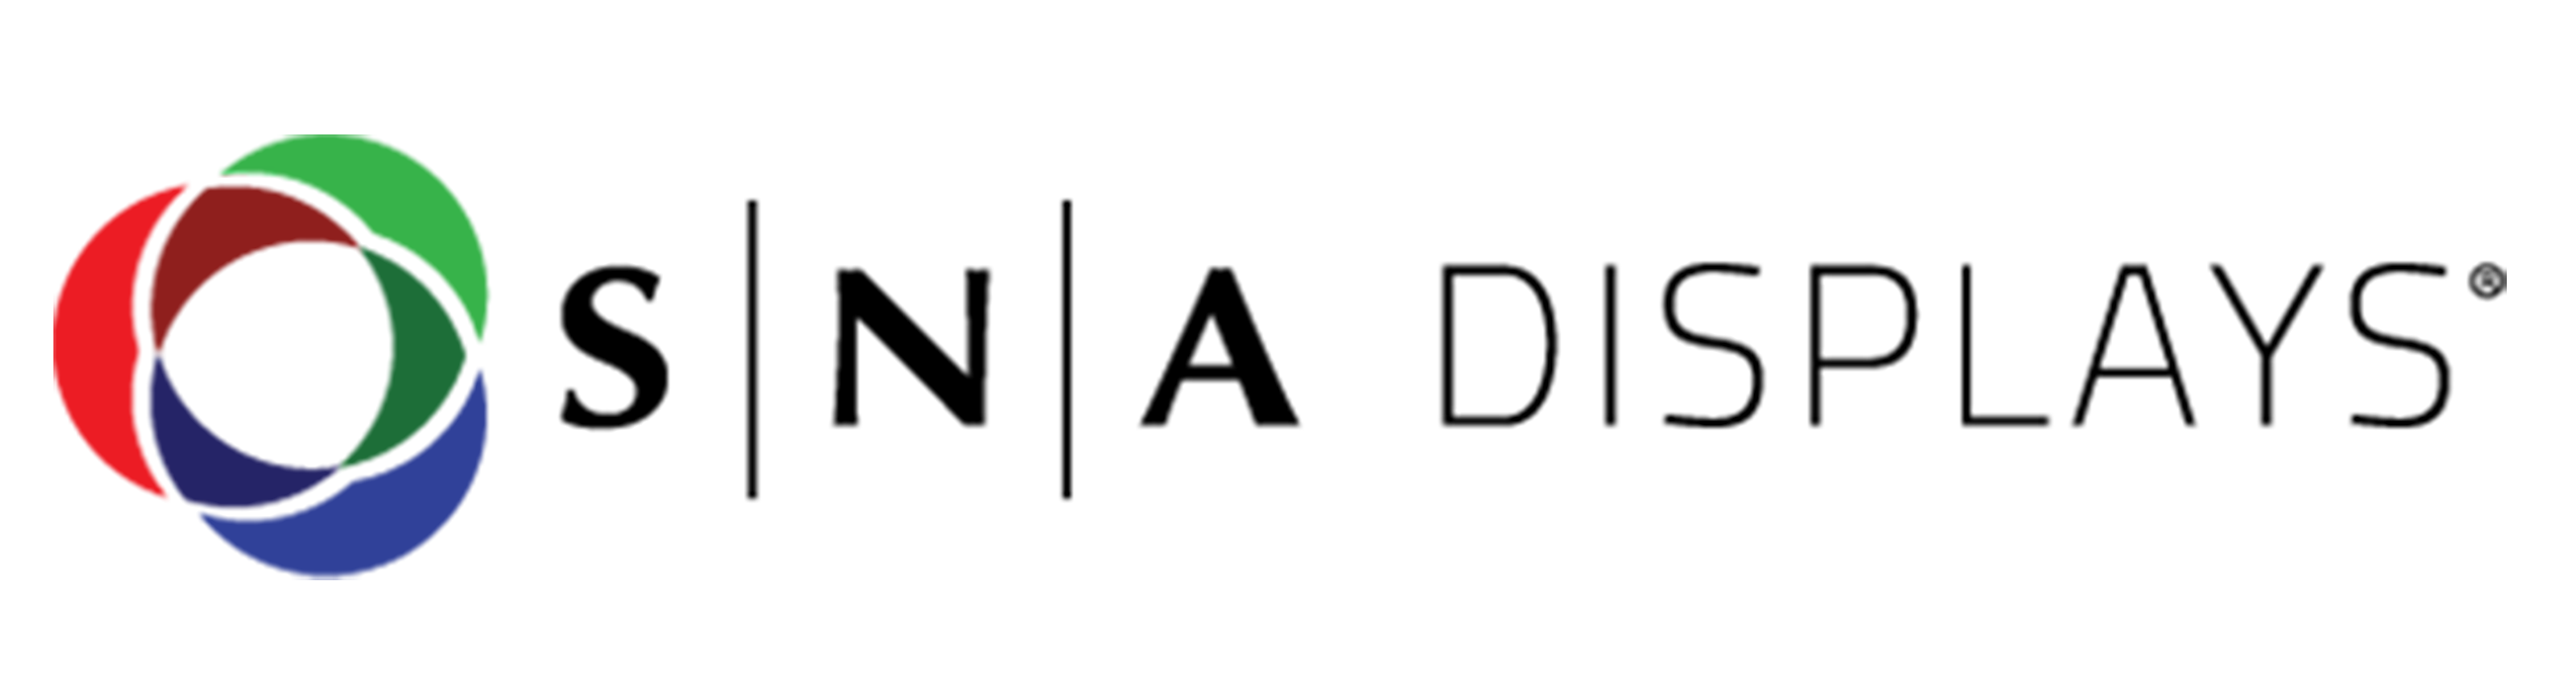 SNA_logo